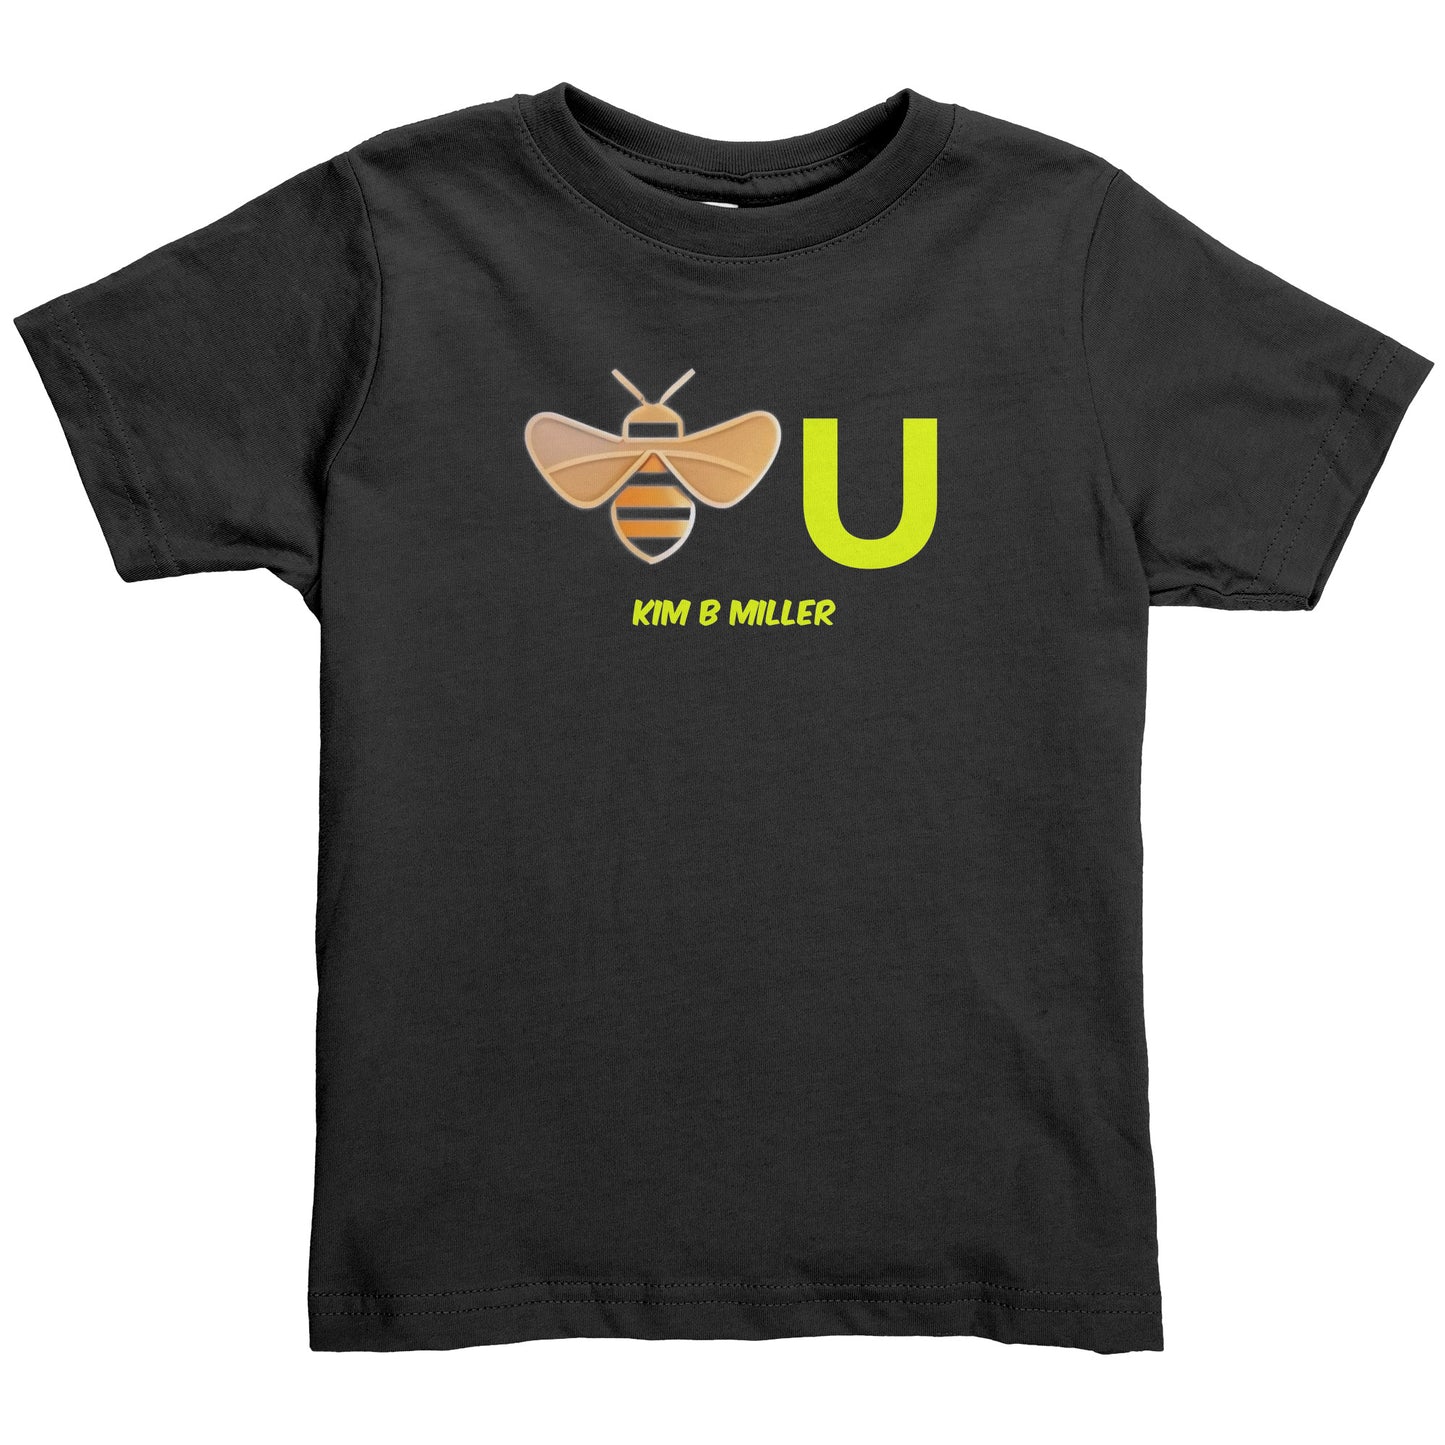 "Bee" You Rabbit Skins Toddler Shirt B